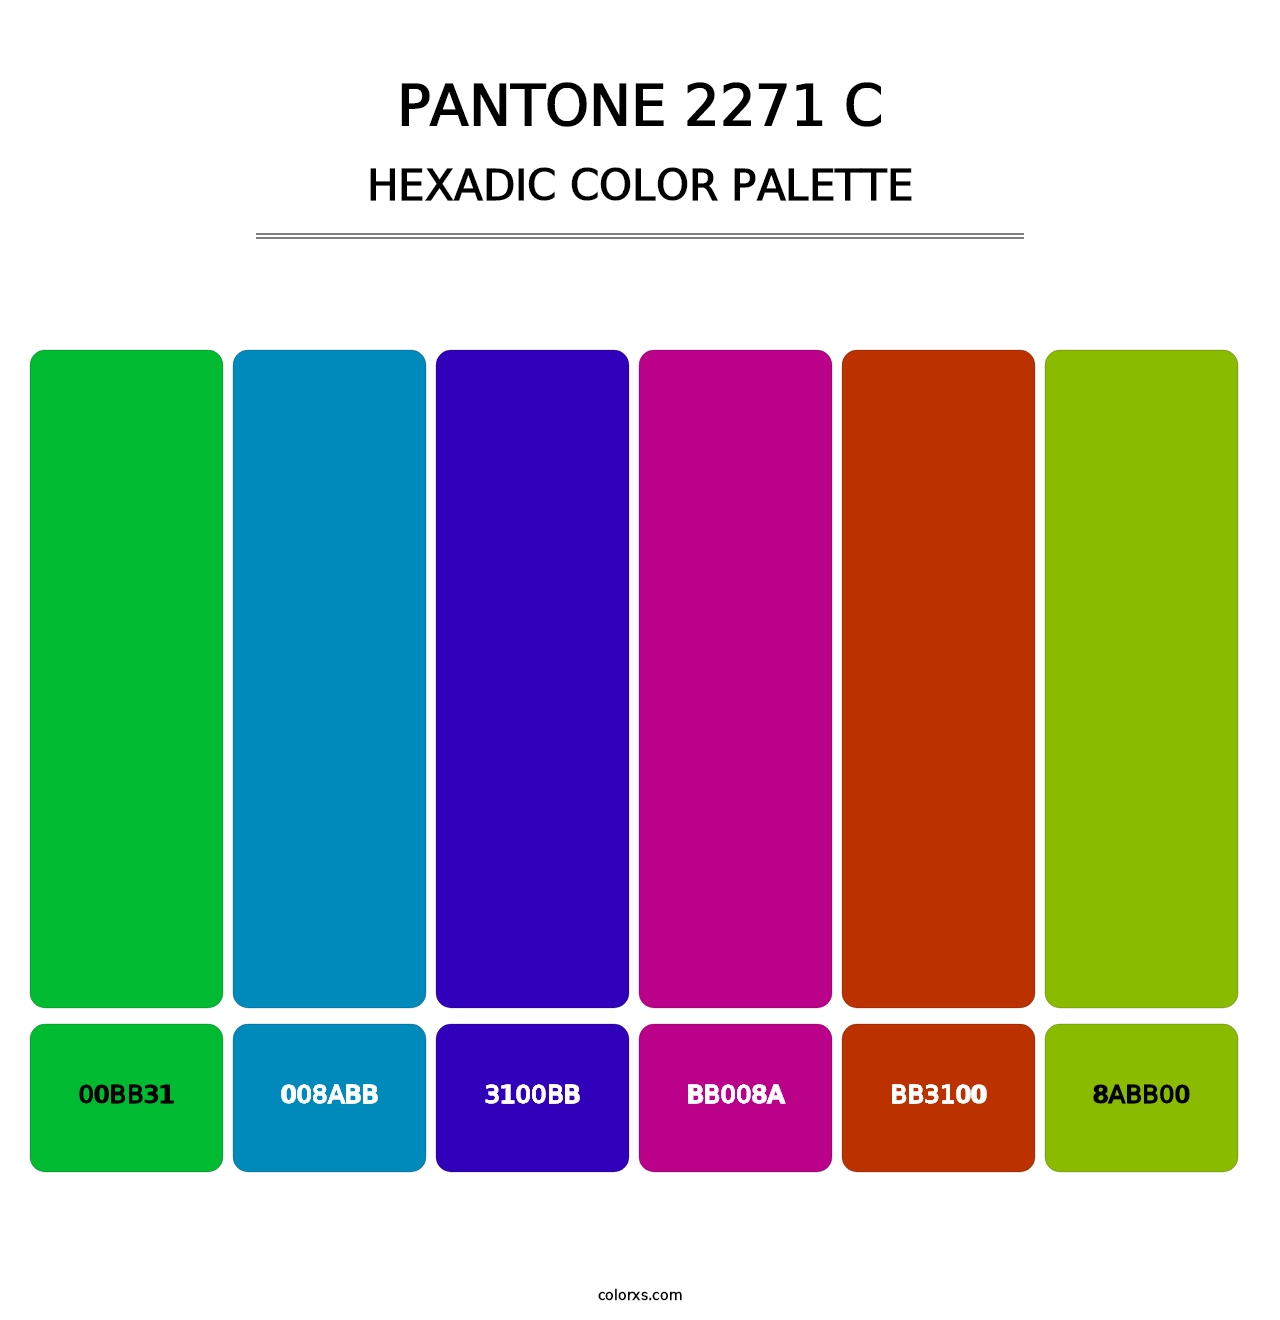 PANTONE 2271 C - Hexadic Color Palette